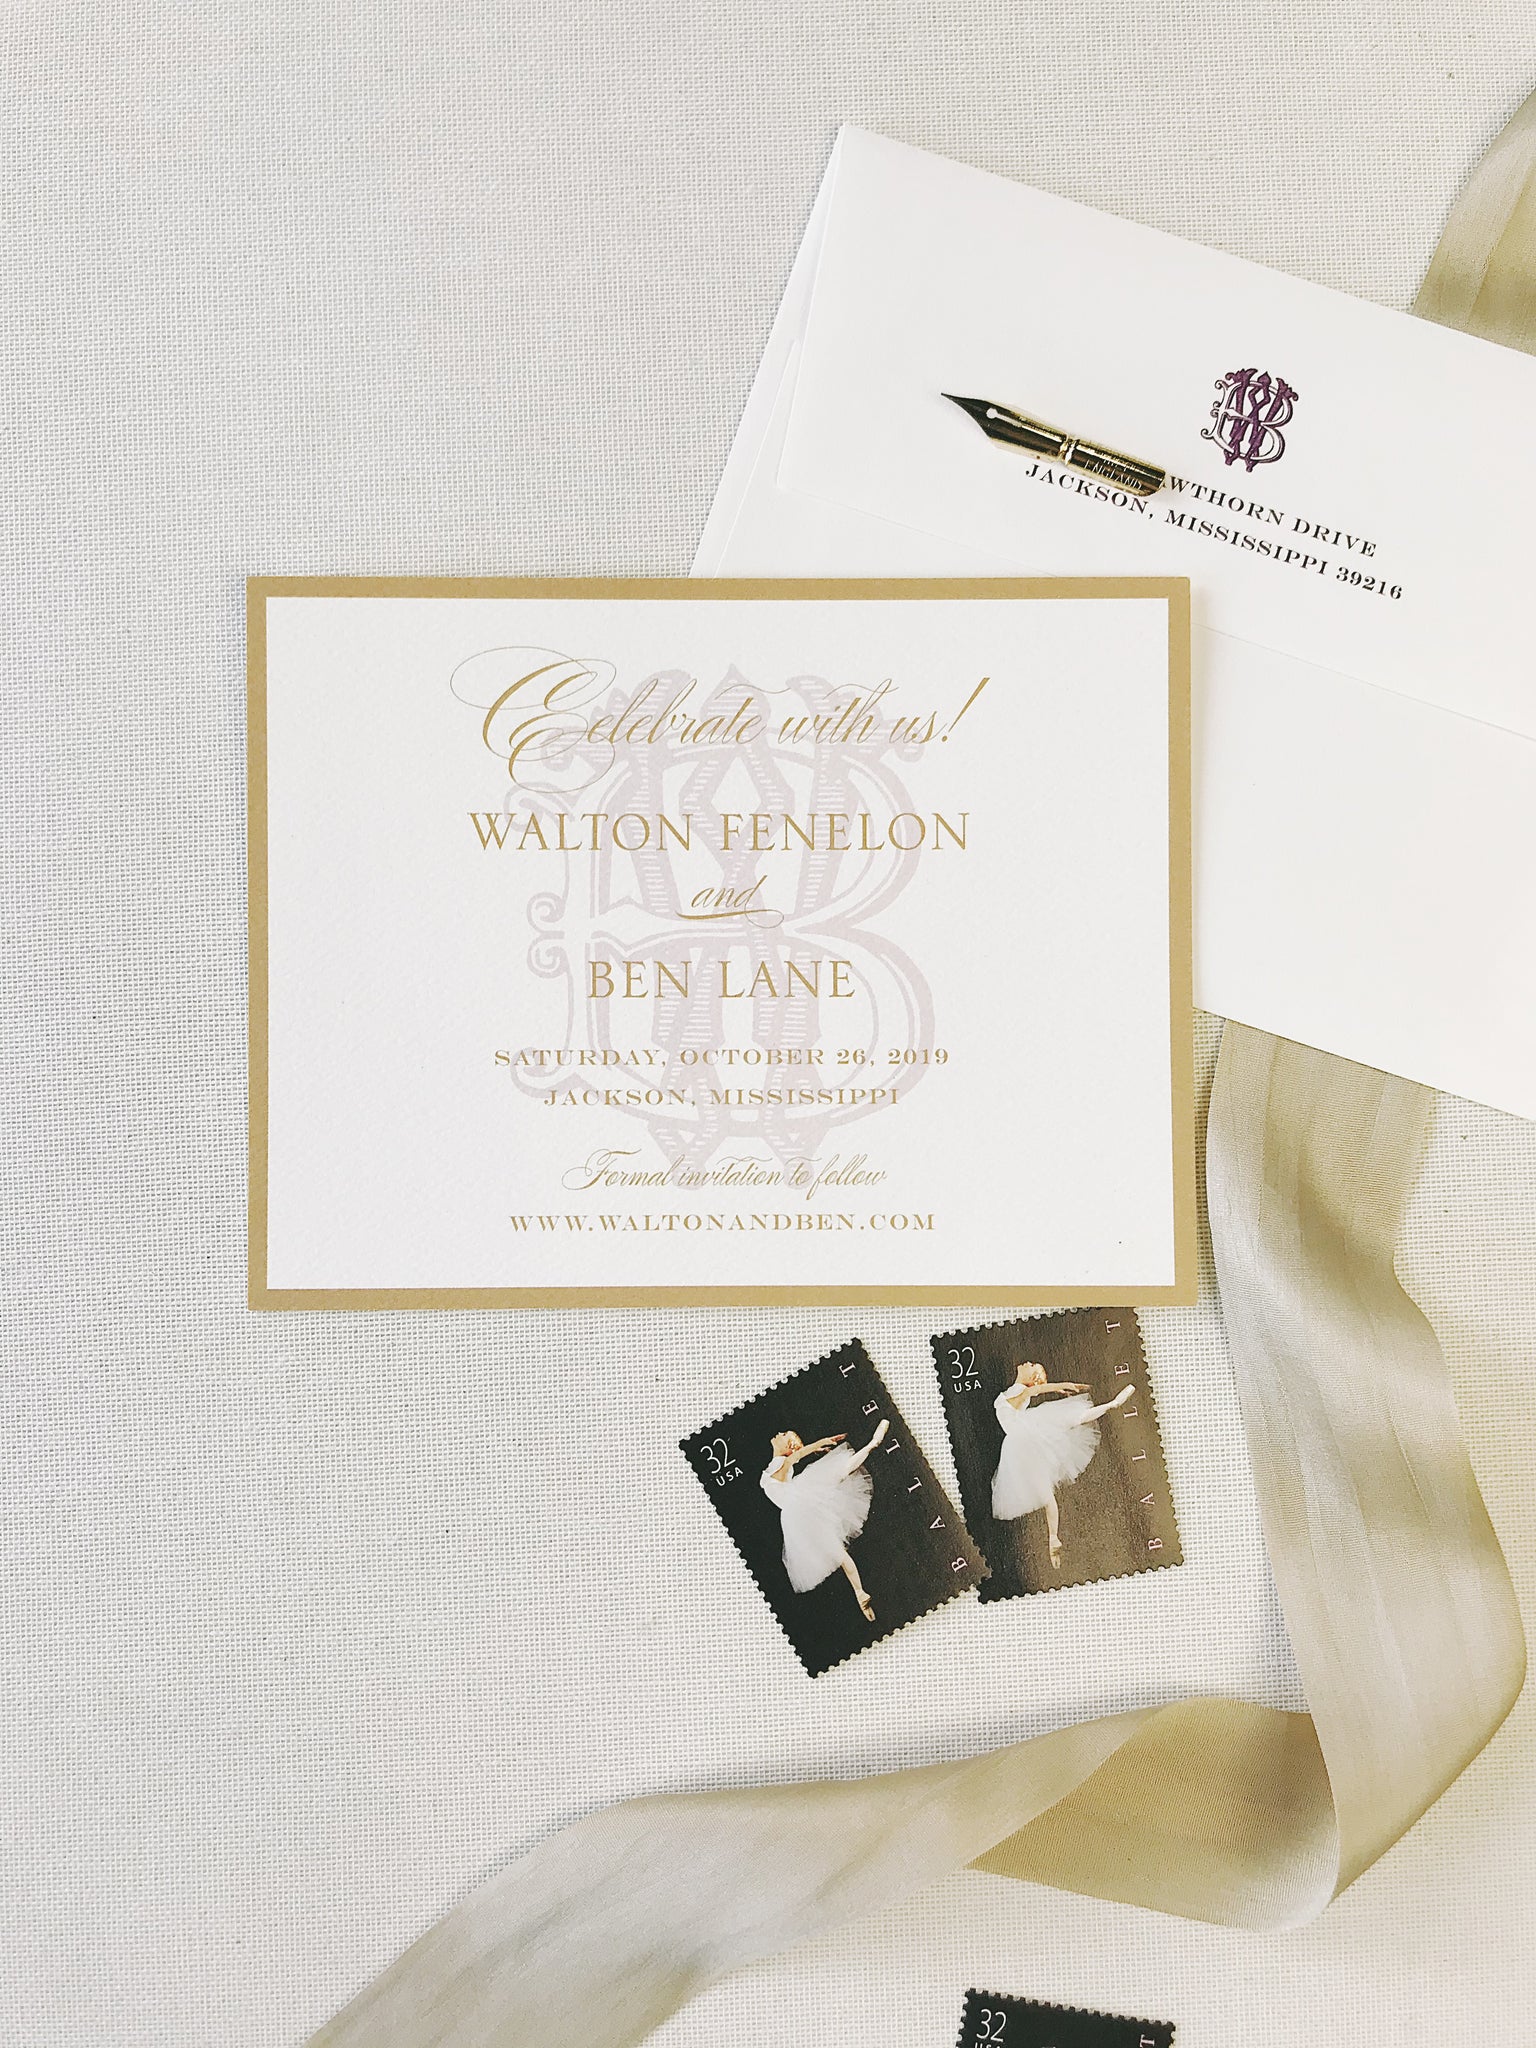 Fenelon Wedding Invitation - Deposit Listing